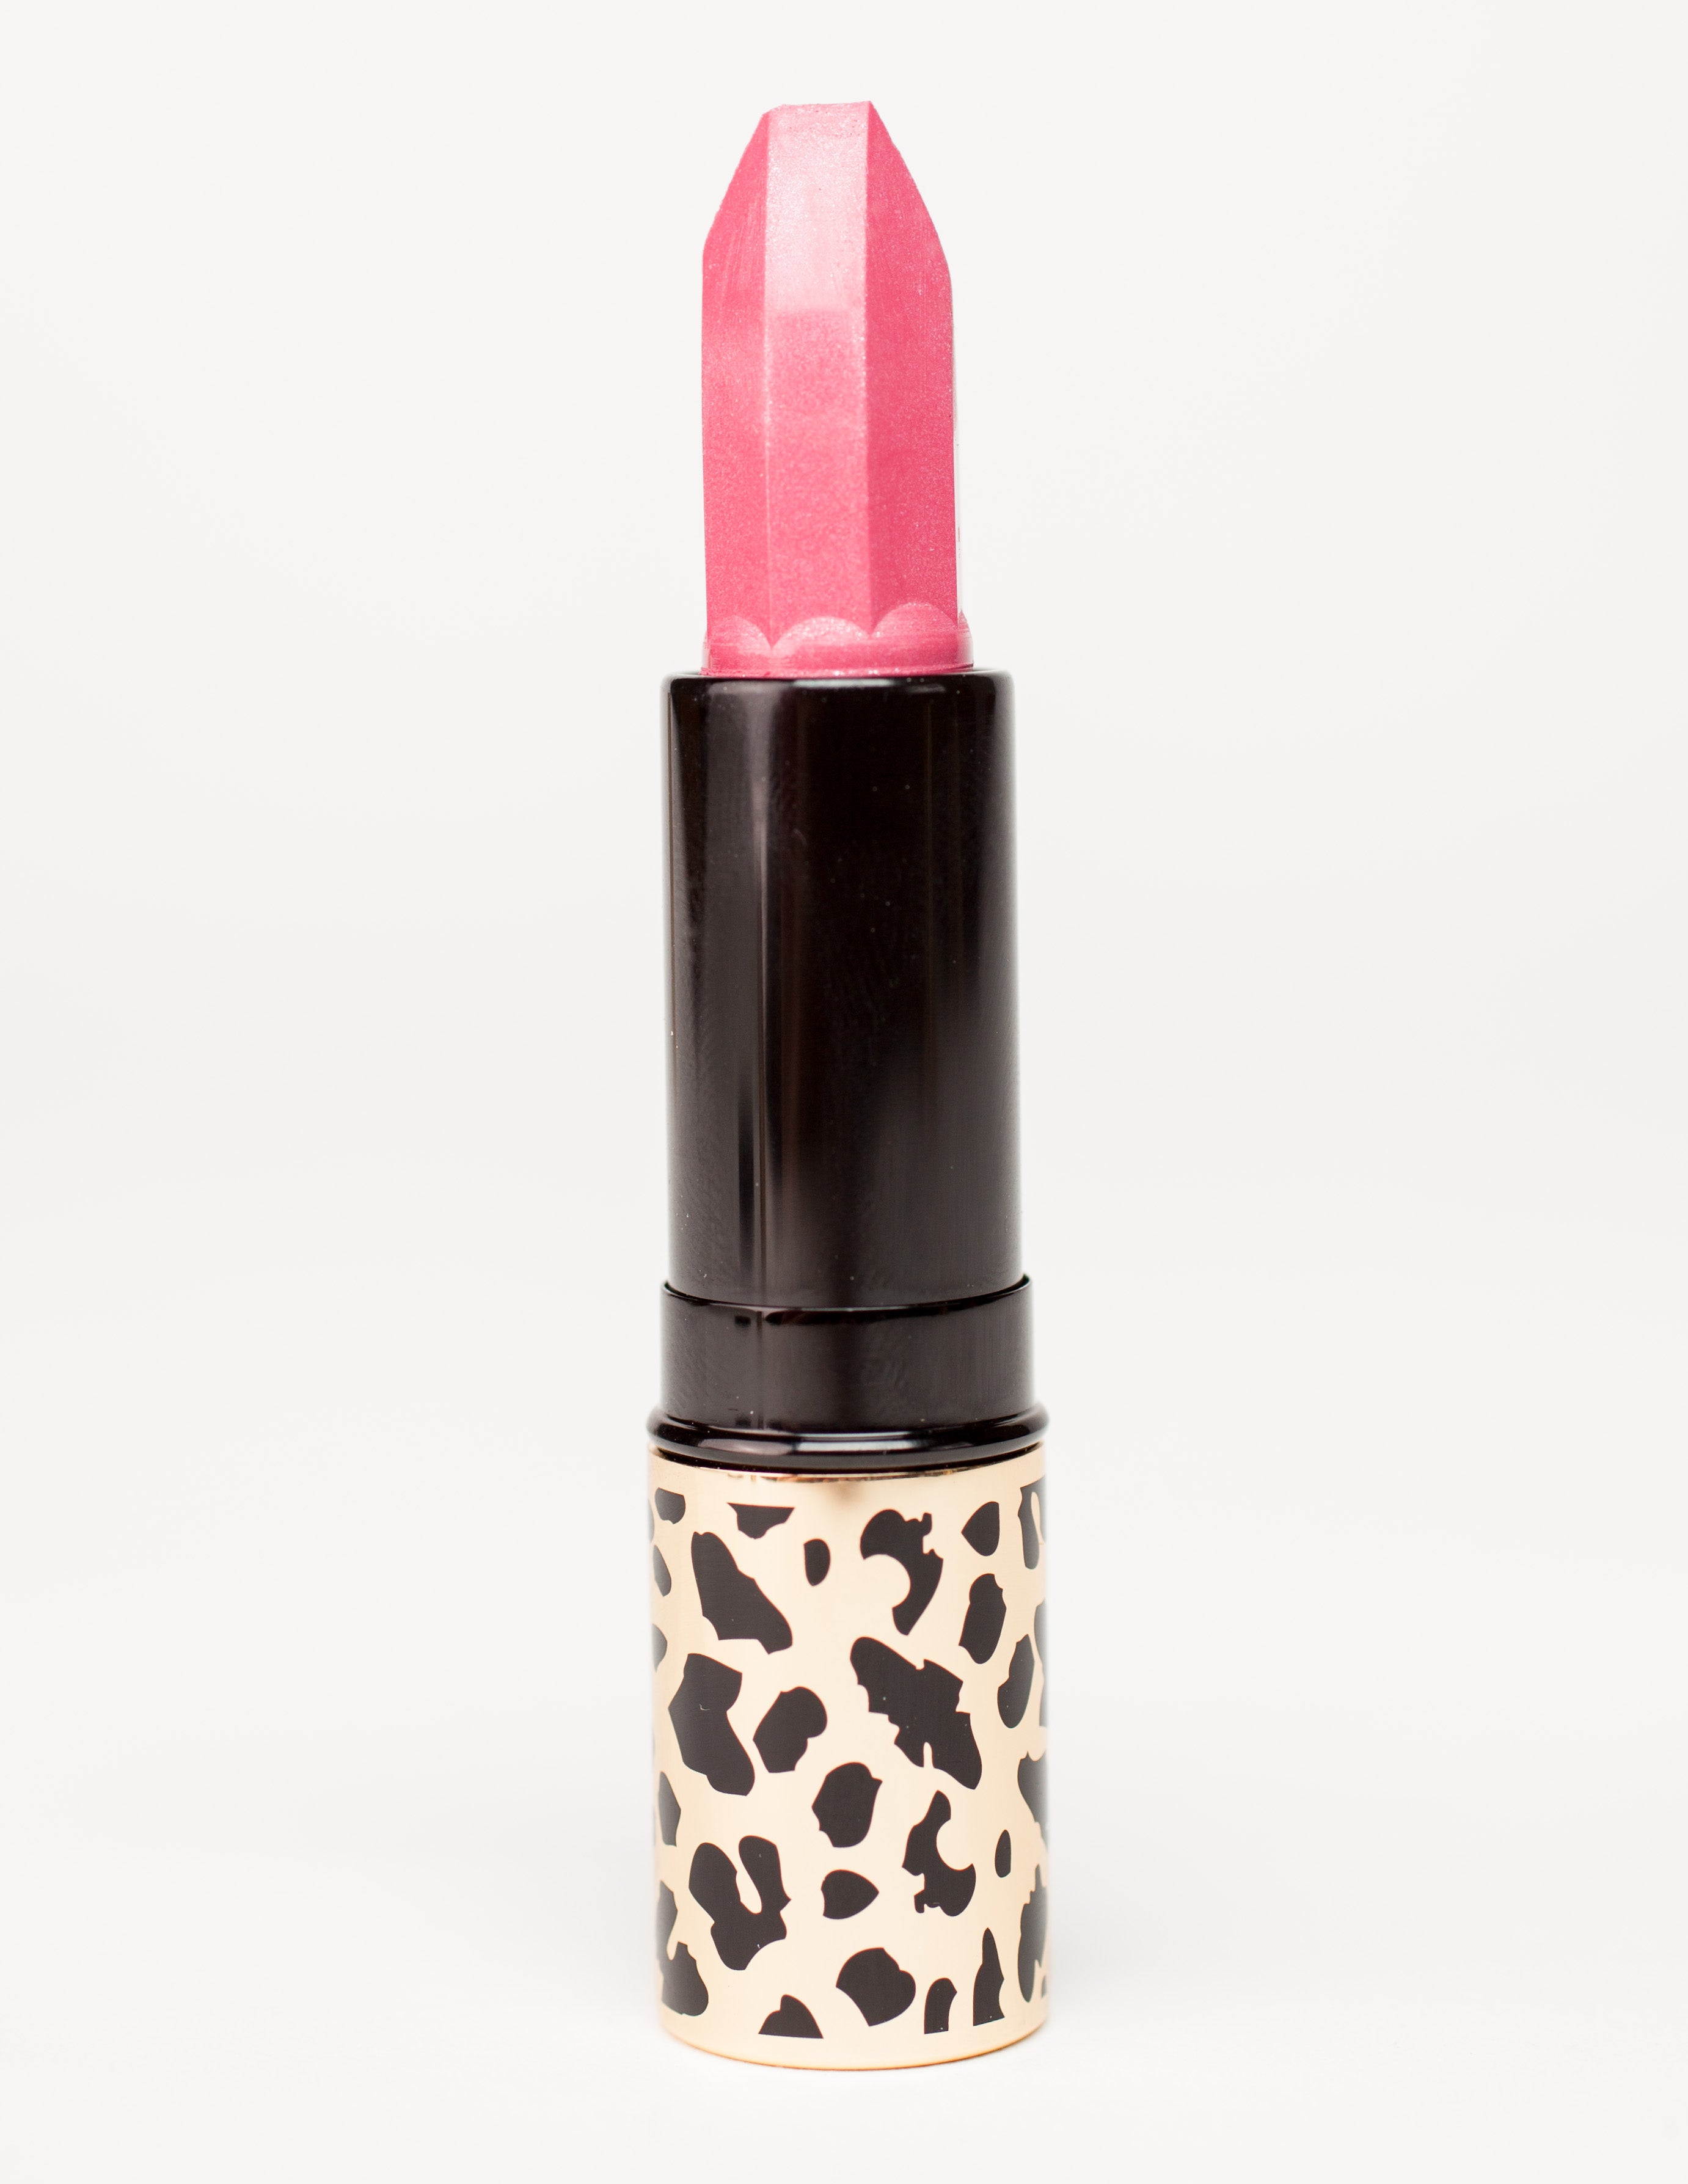 LTW Ziegfeld Girl Pink Lipstick Swatch